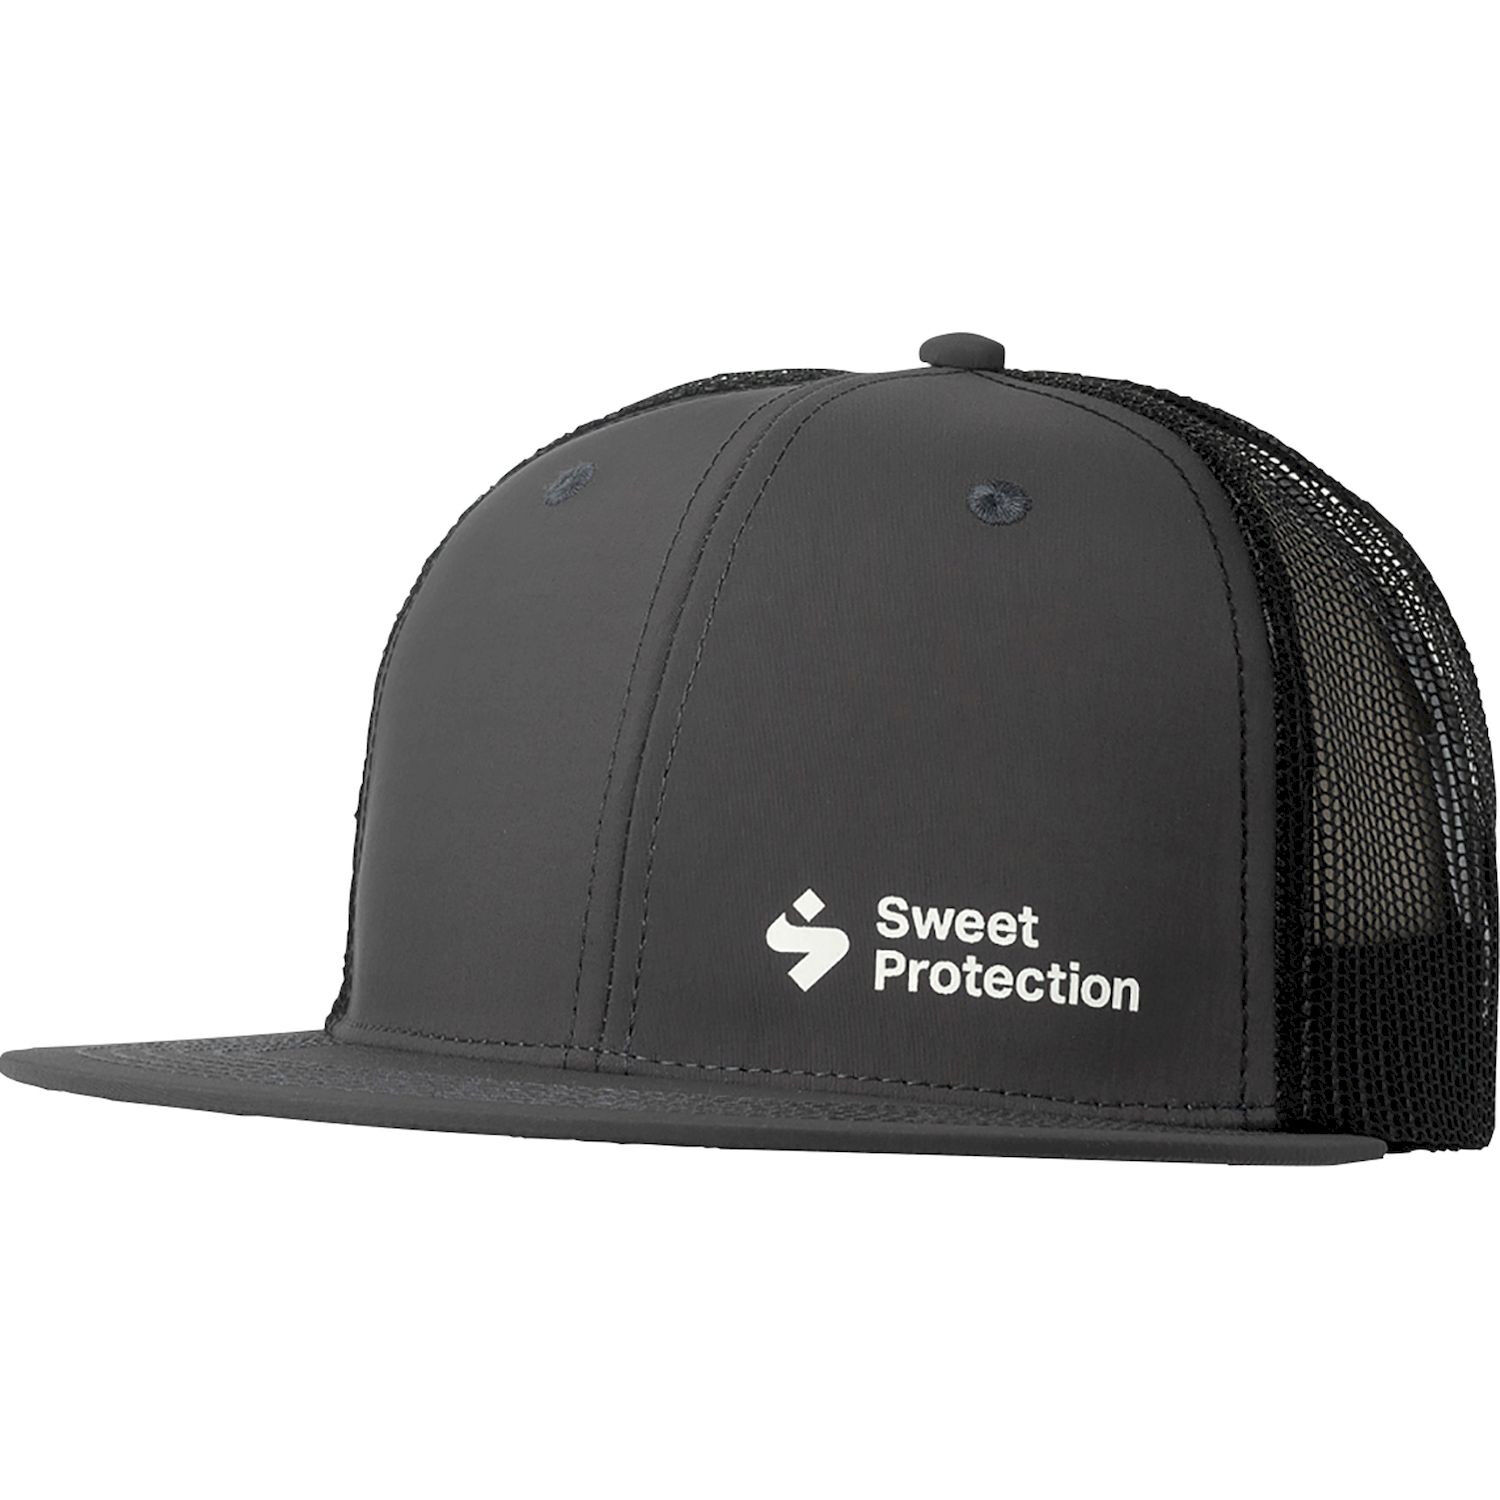 Sweet Protection Corporate Trucker Cap - Gorra - Hombre